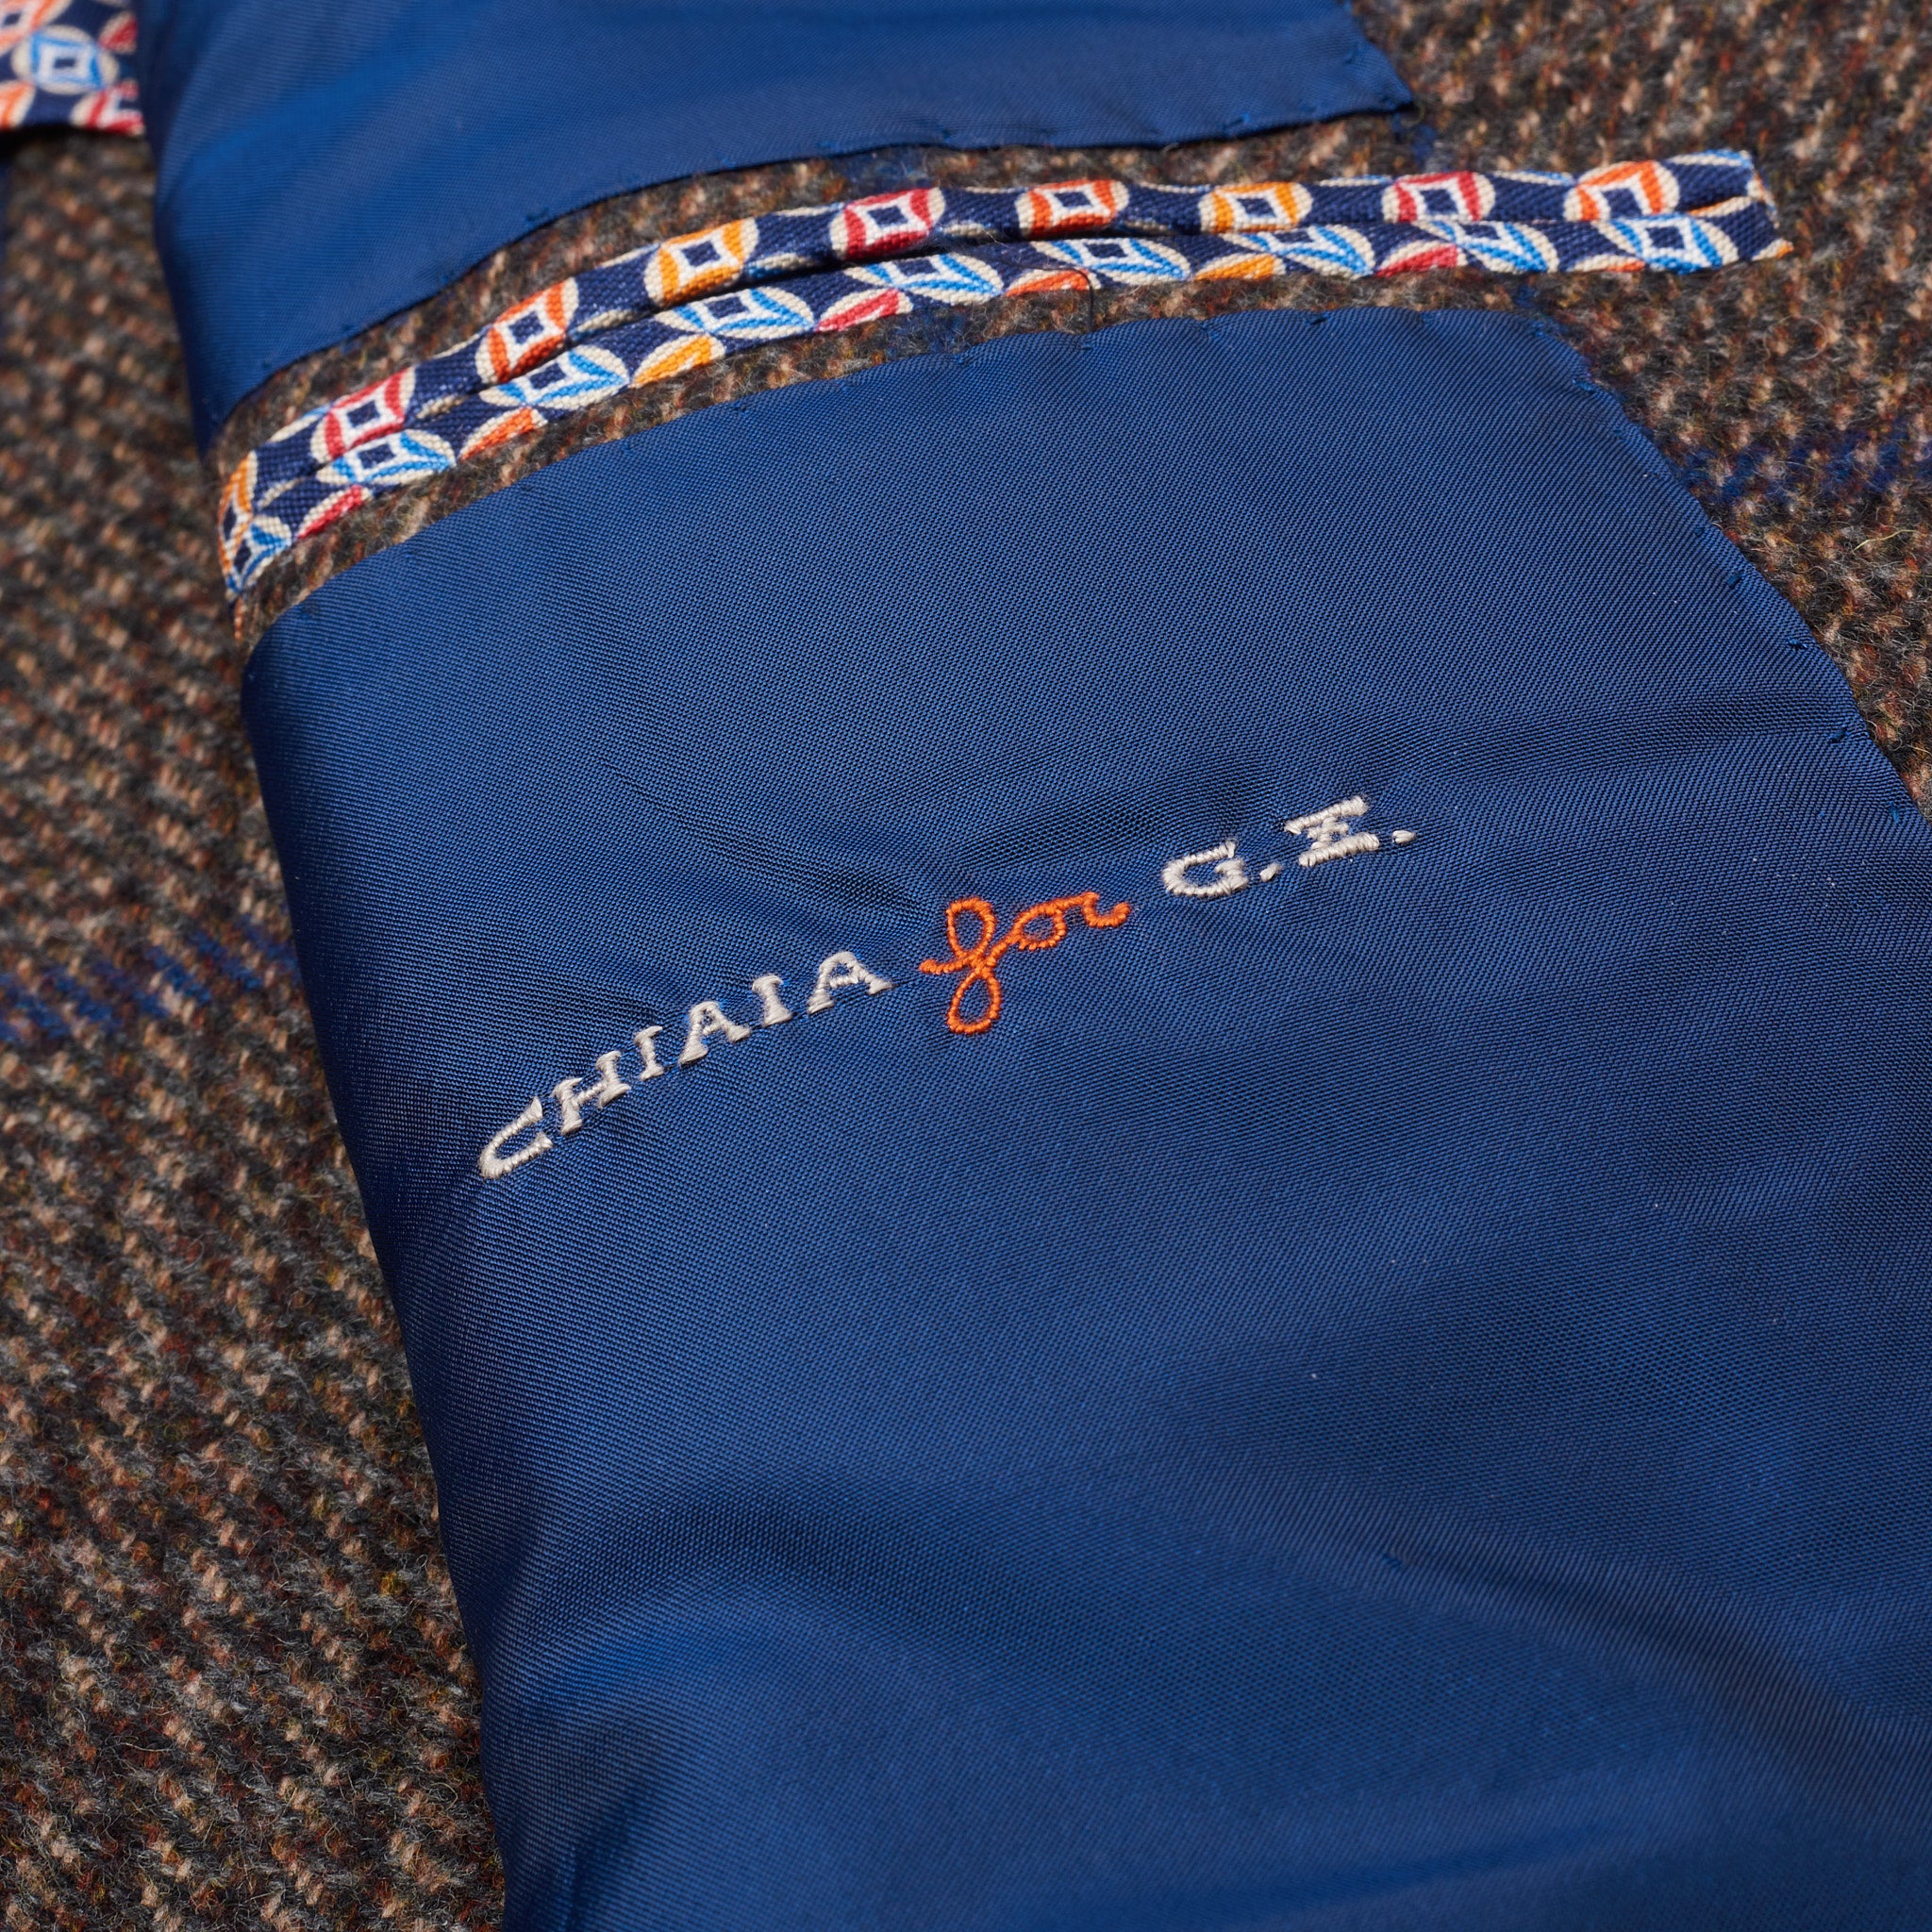 SARTORIA CHIAIA Bespoke Handmade Brown Plaid Wool-Cashmere Jacket 54 NEW 44 SARTORIA CHIAIA